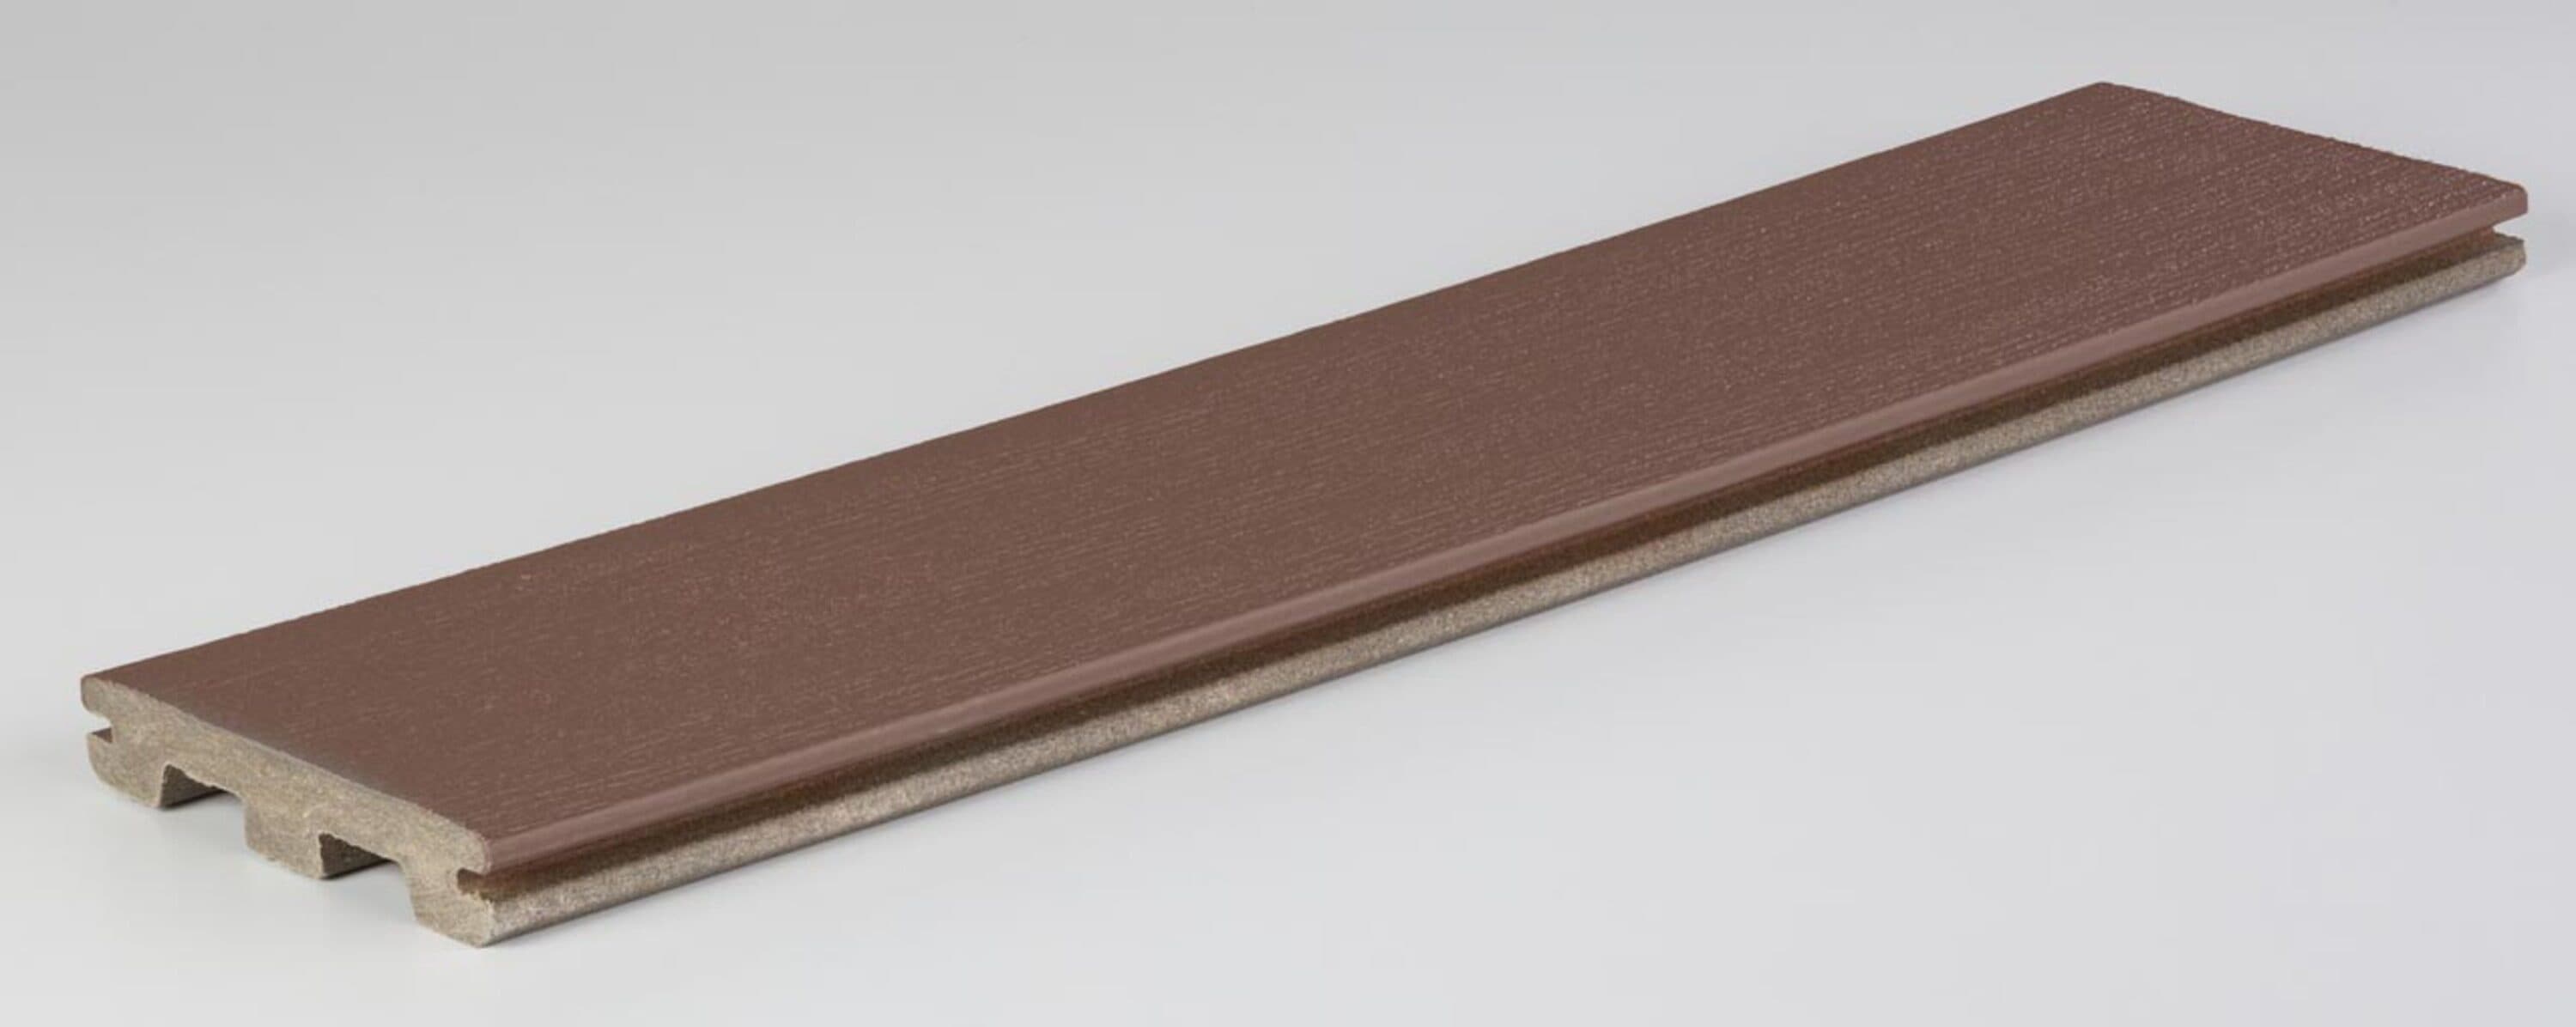 Prime 5/4-in x 6-in x 20-ft Dark Teak Square Composite Deck Board in Brown | - TimberTech ES5420DT